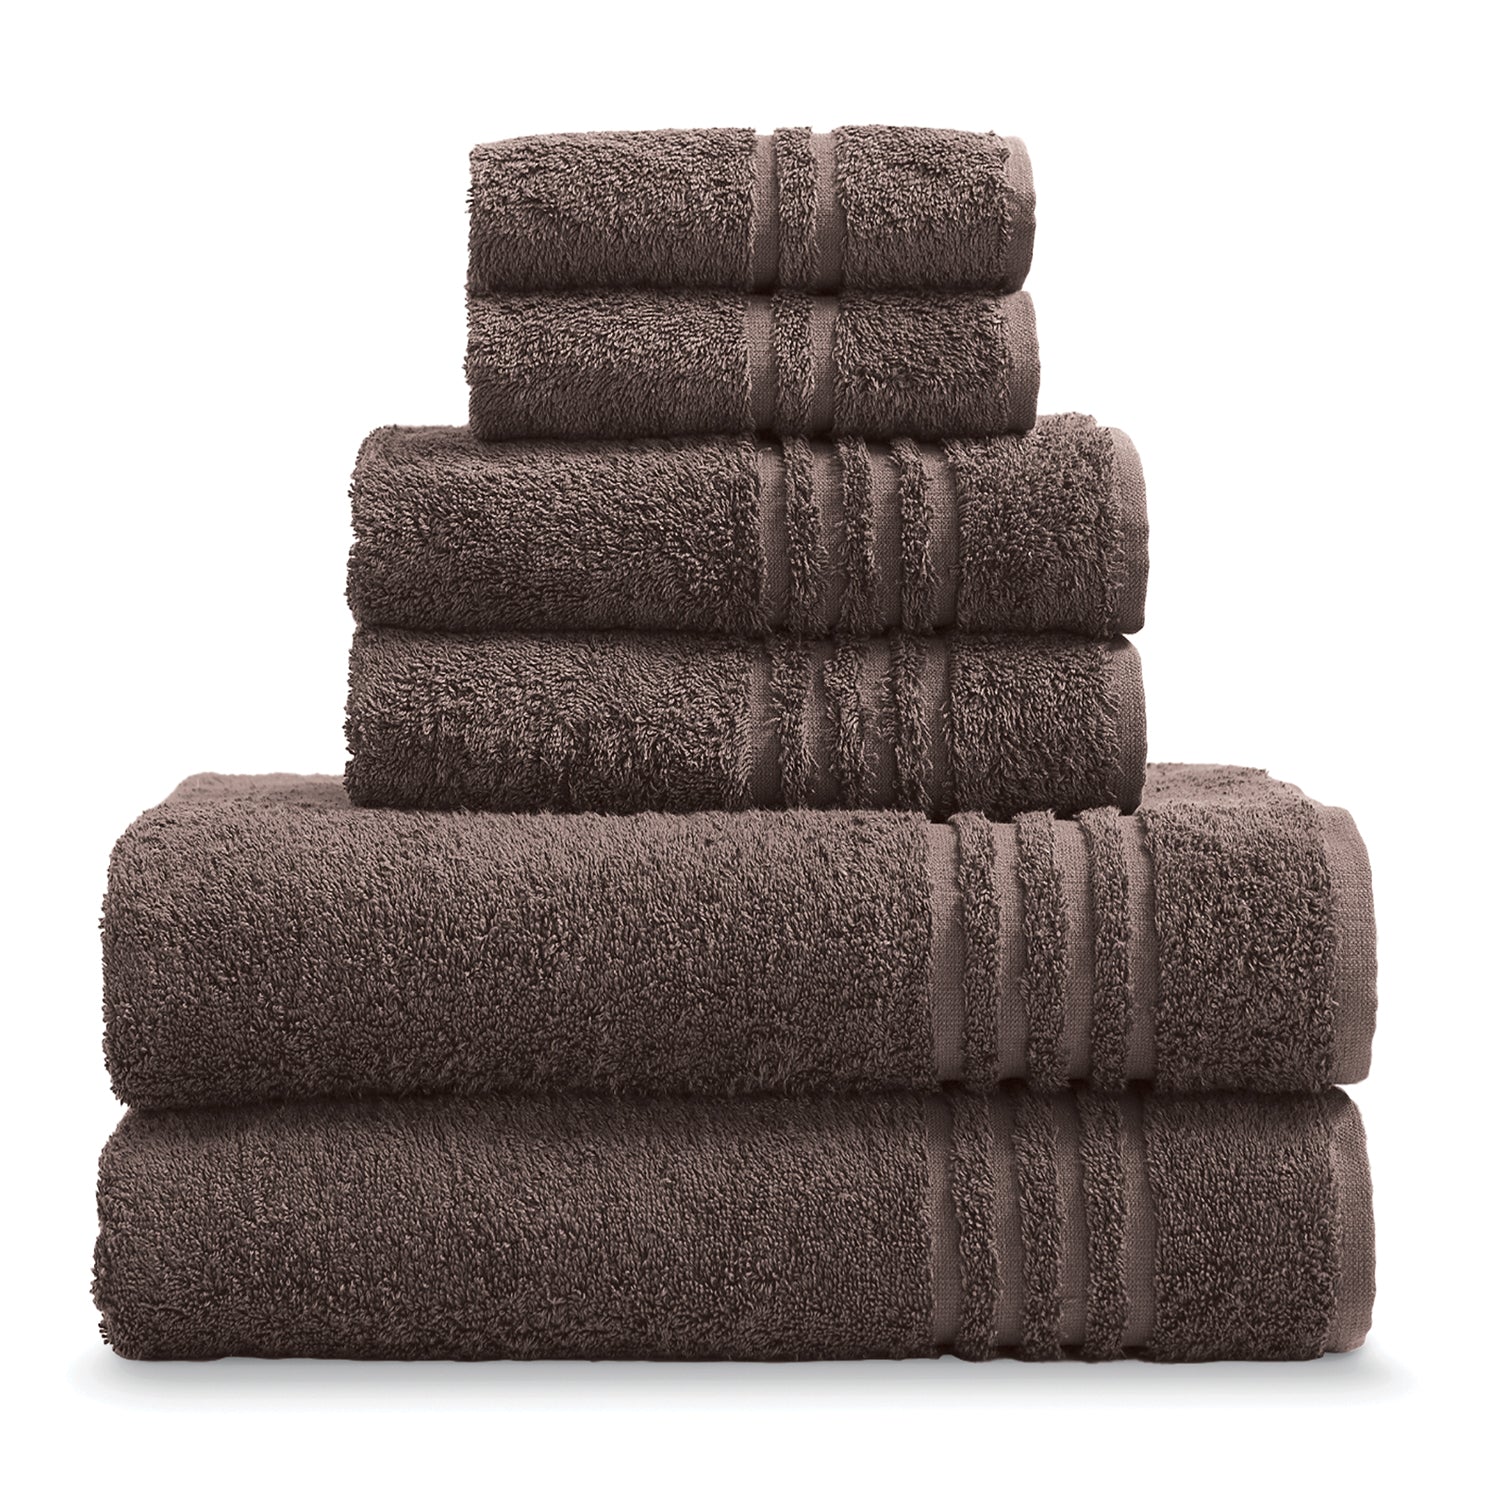 Towels / Color-Brown